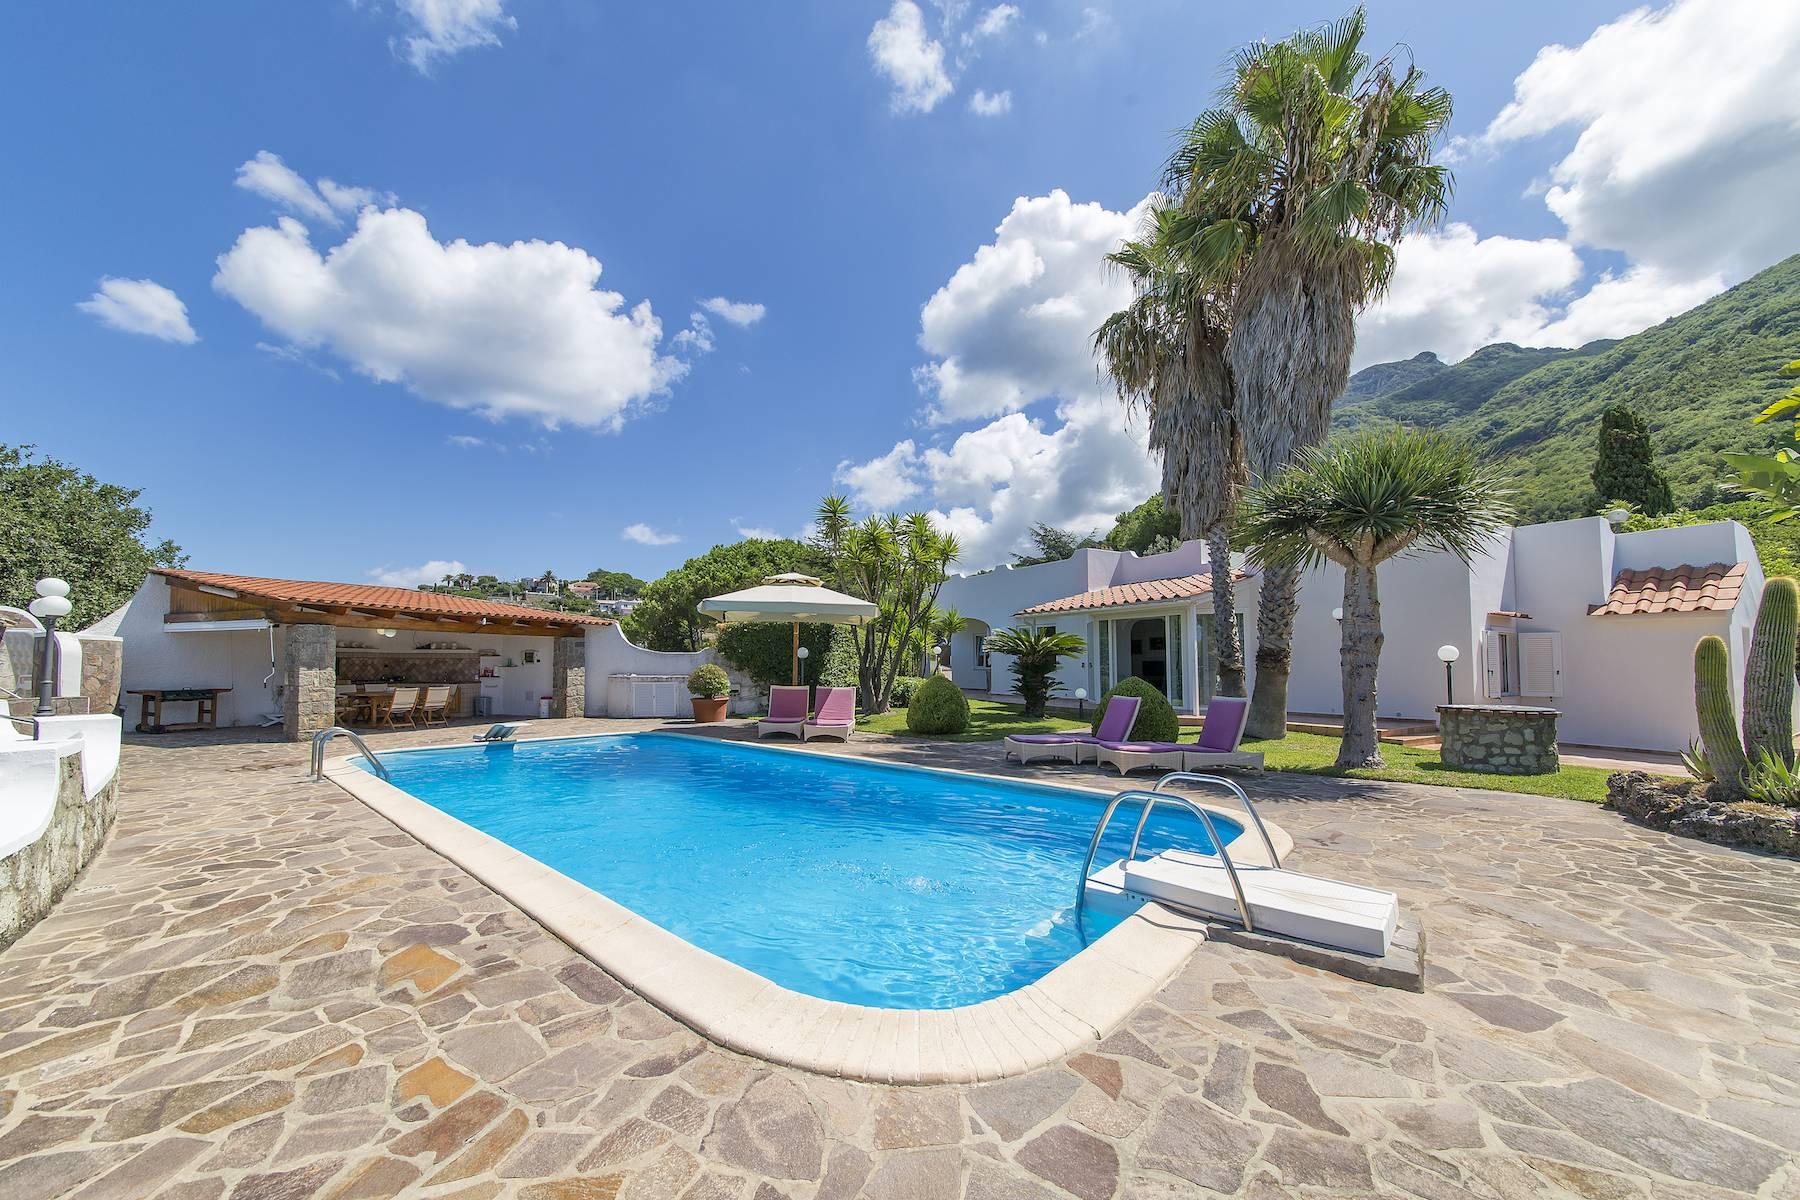 Wonderful villa with swimming pool in Ischia - 1